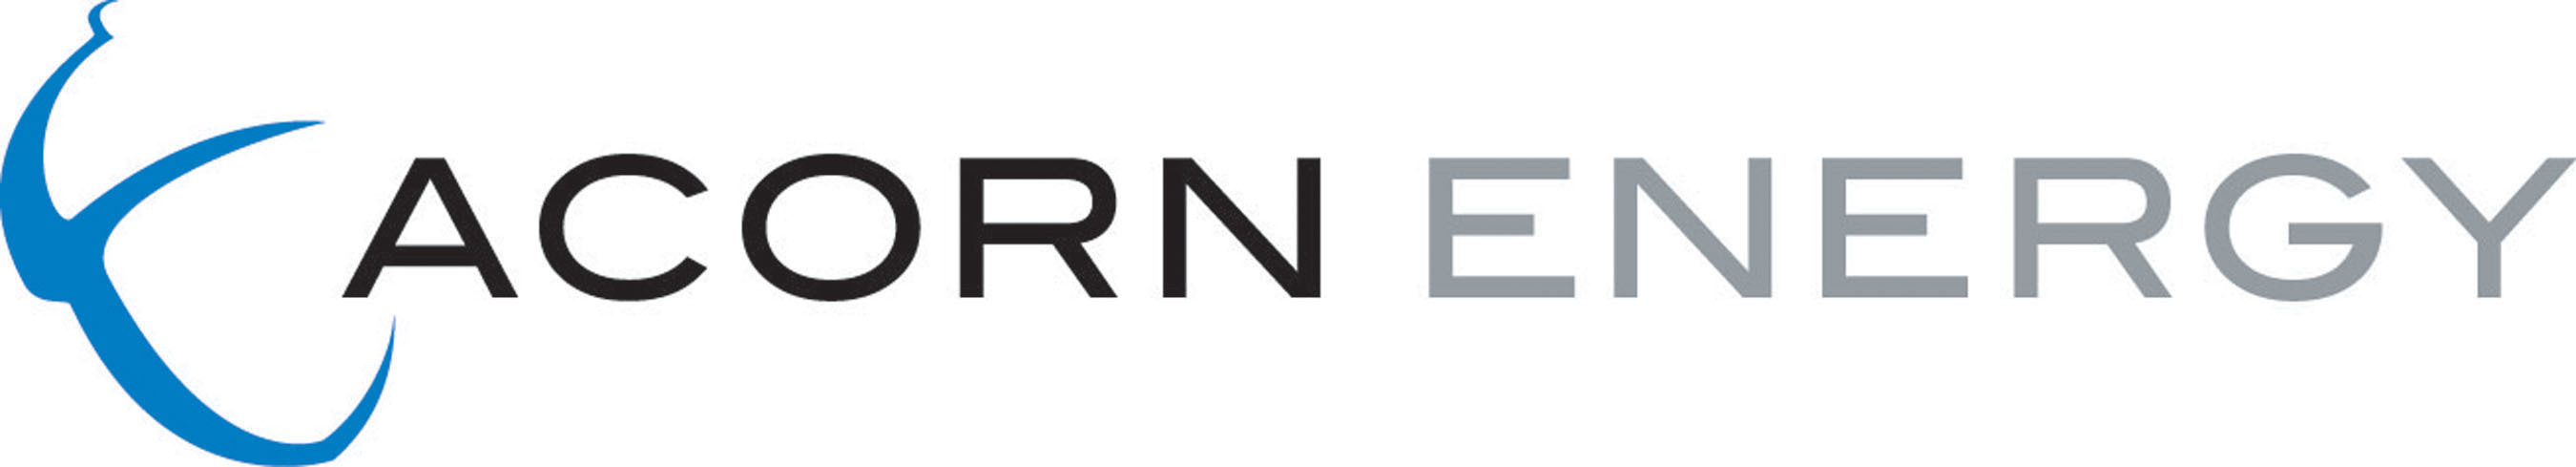 Acorn Energy Logo.